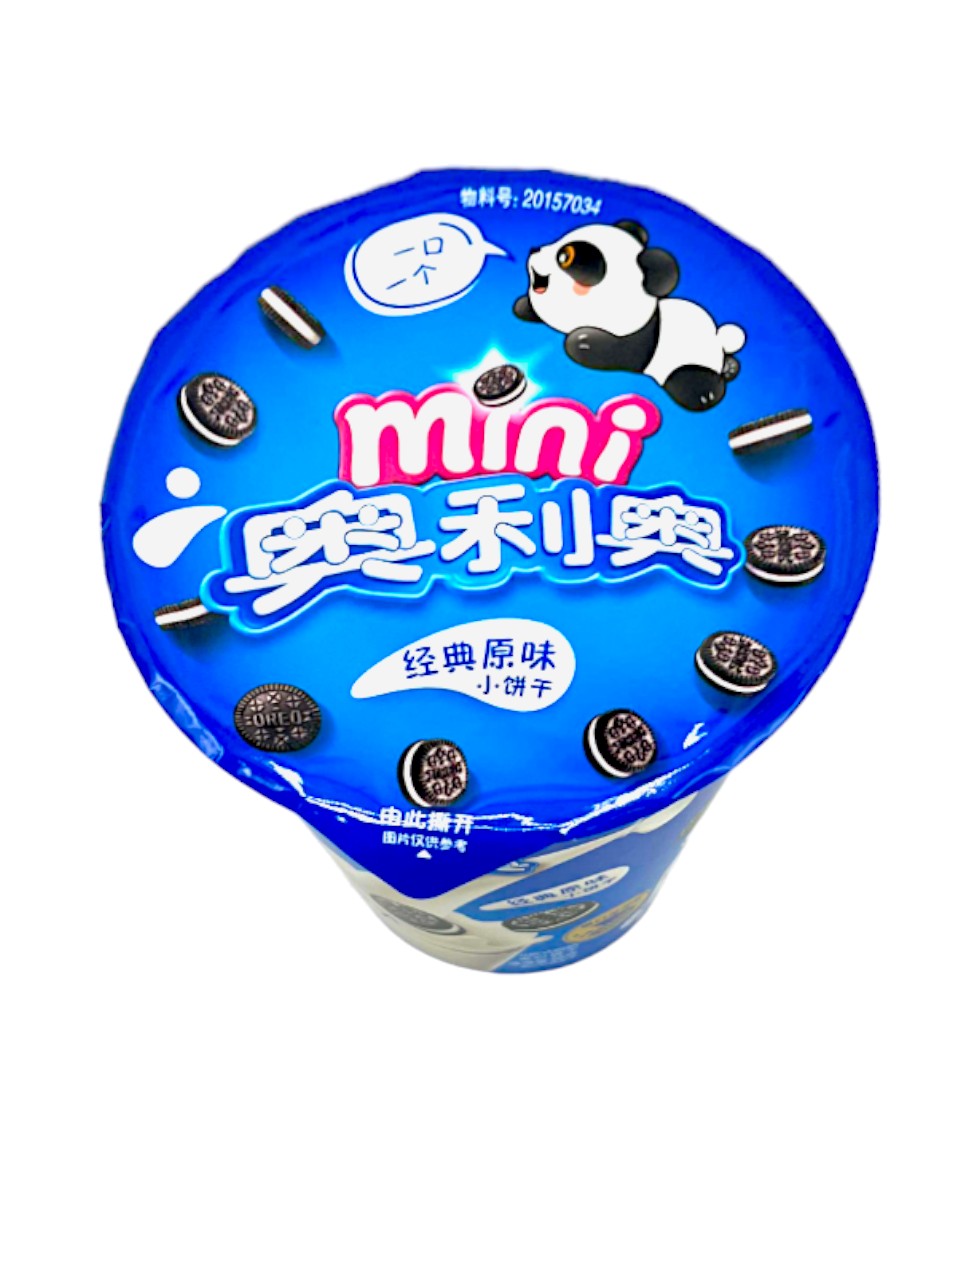 Oreo Mini Biscuit Original 55g (China)